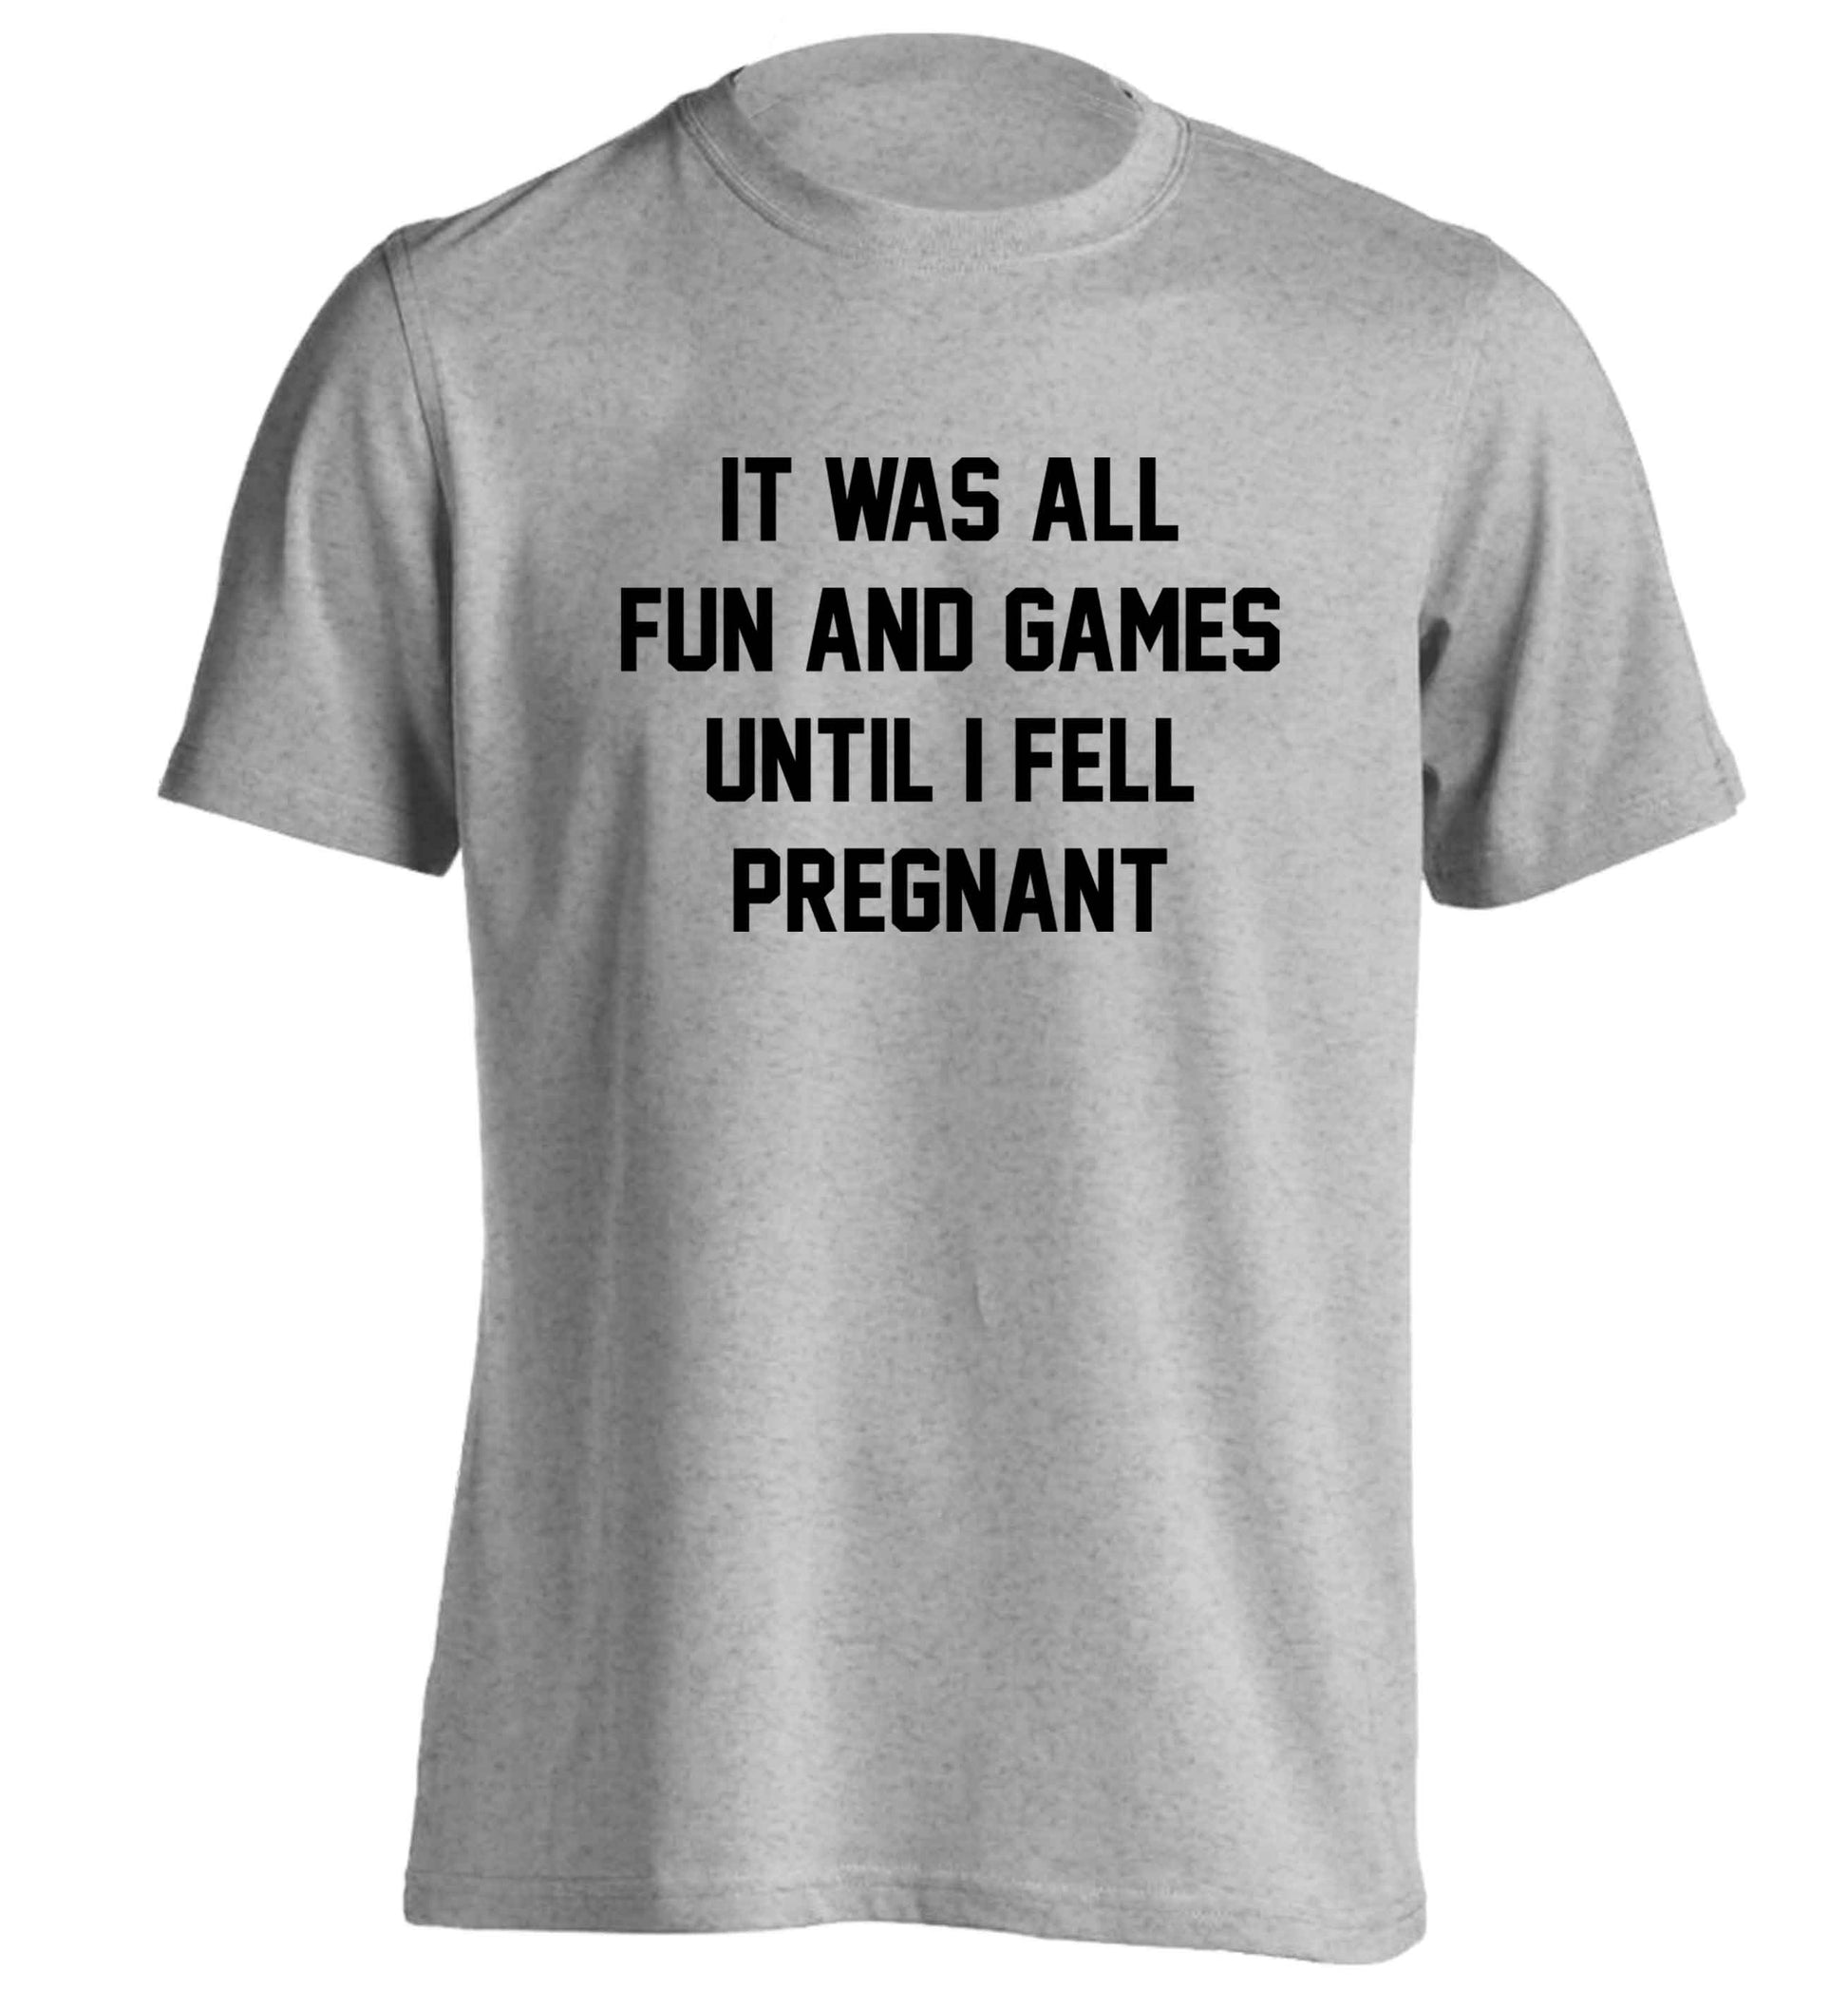 It was all fun and games until I fell pregnant kicks adults unisex grey Tshirt 2XL